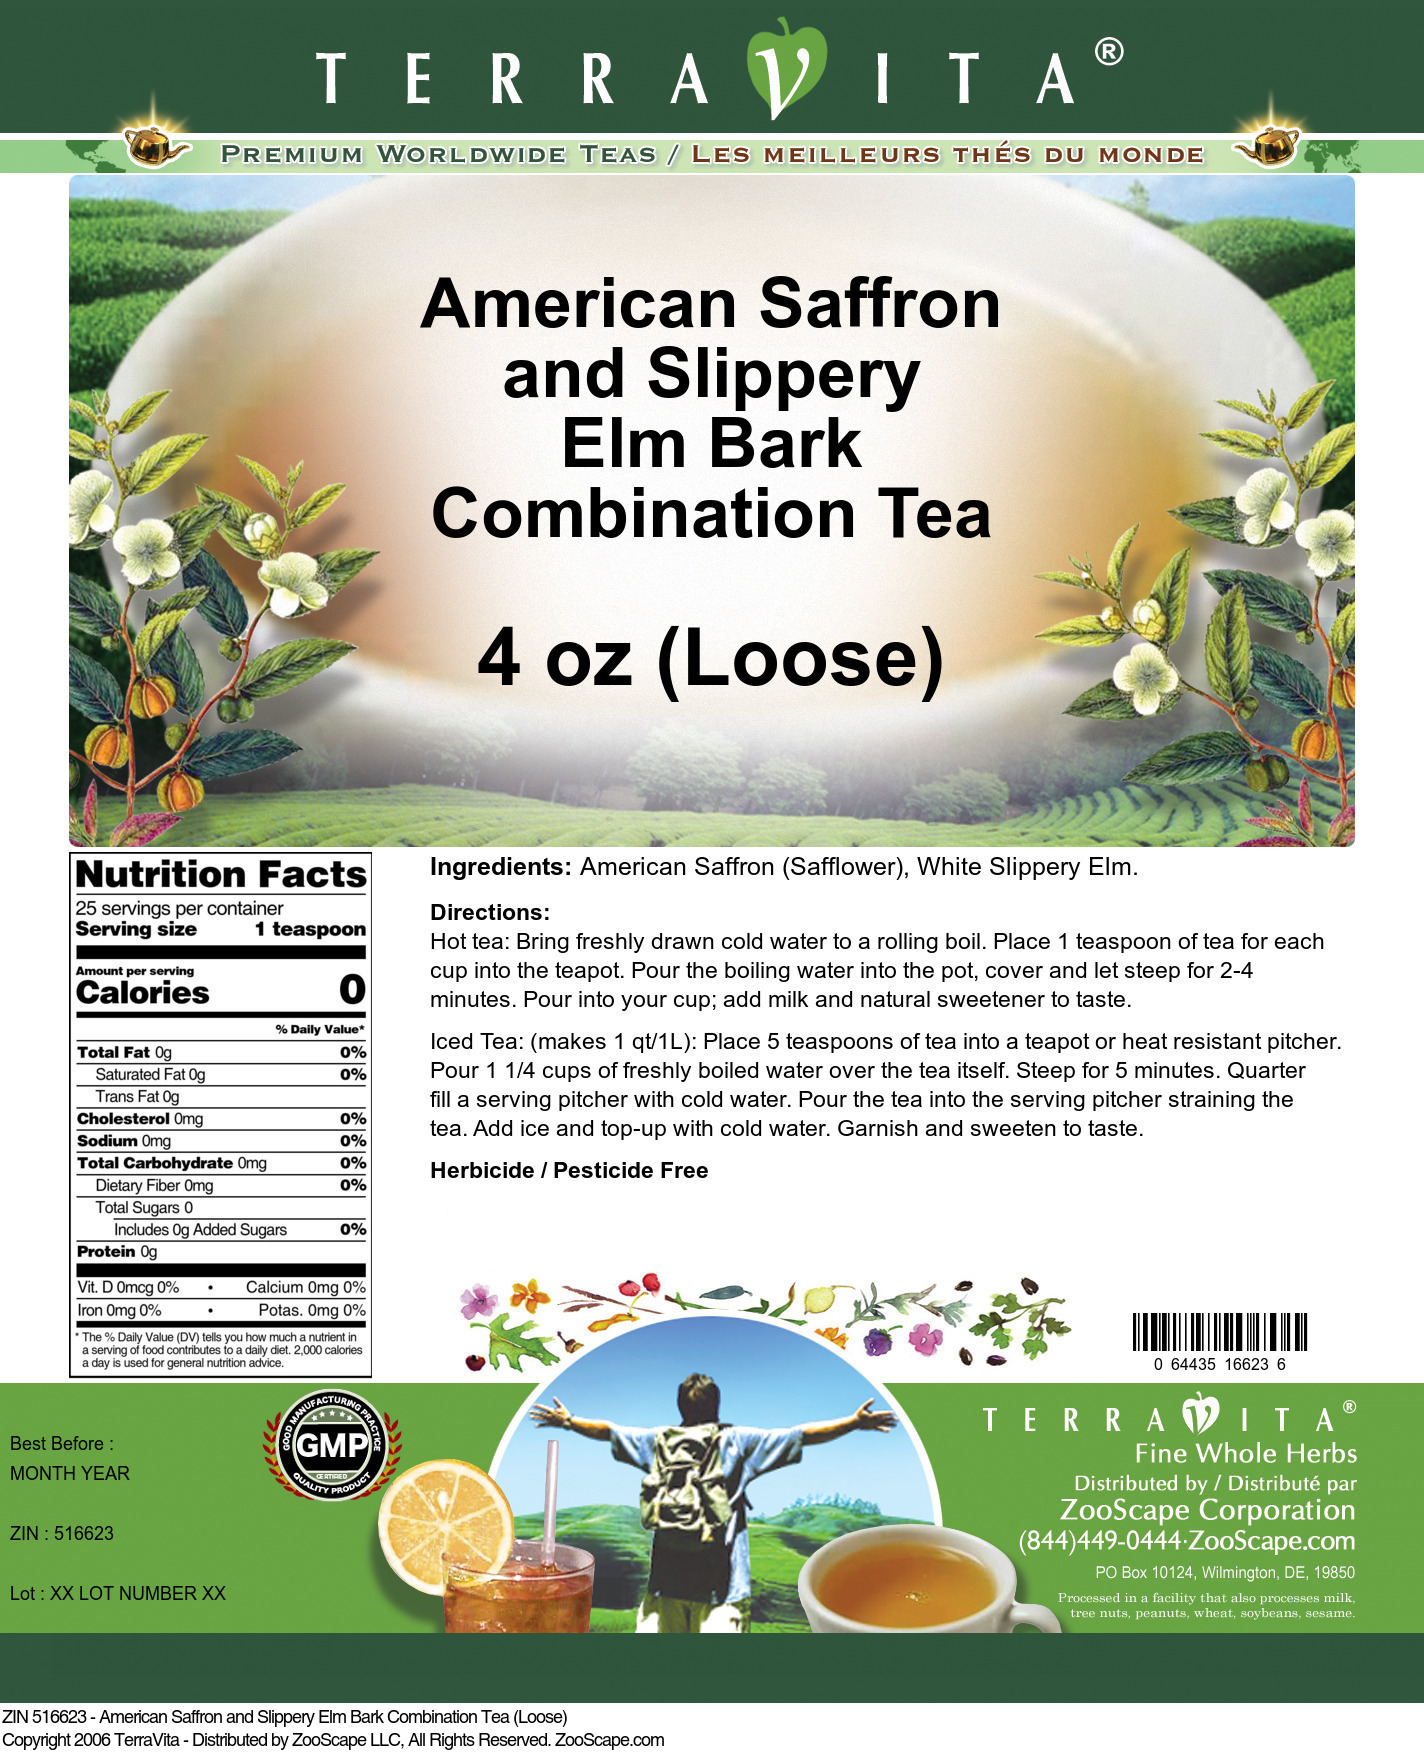 American Saffron and Slippery Elm Bark Combination Tea (Loose) - Label